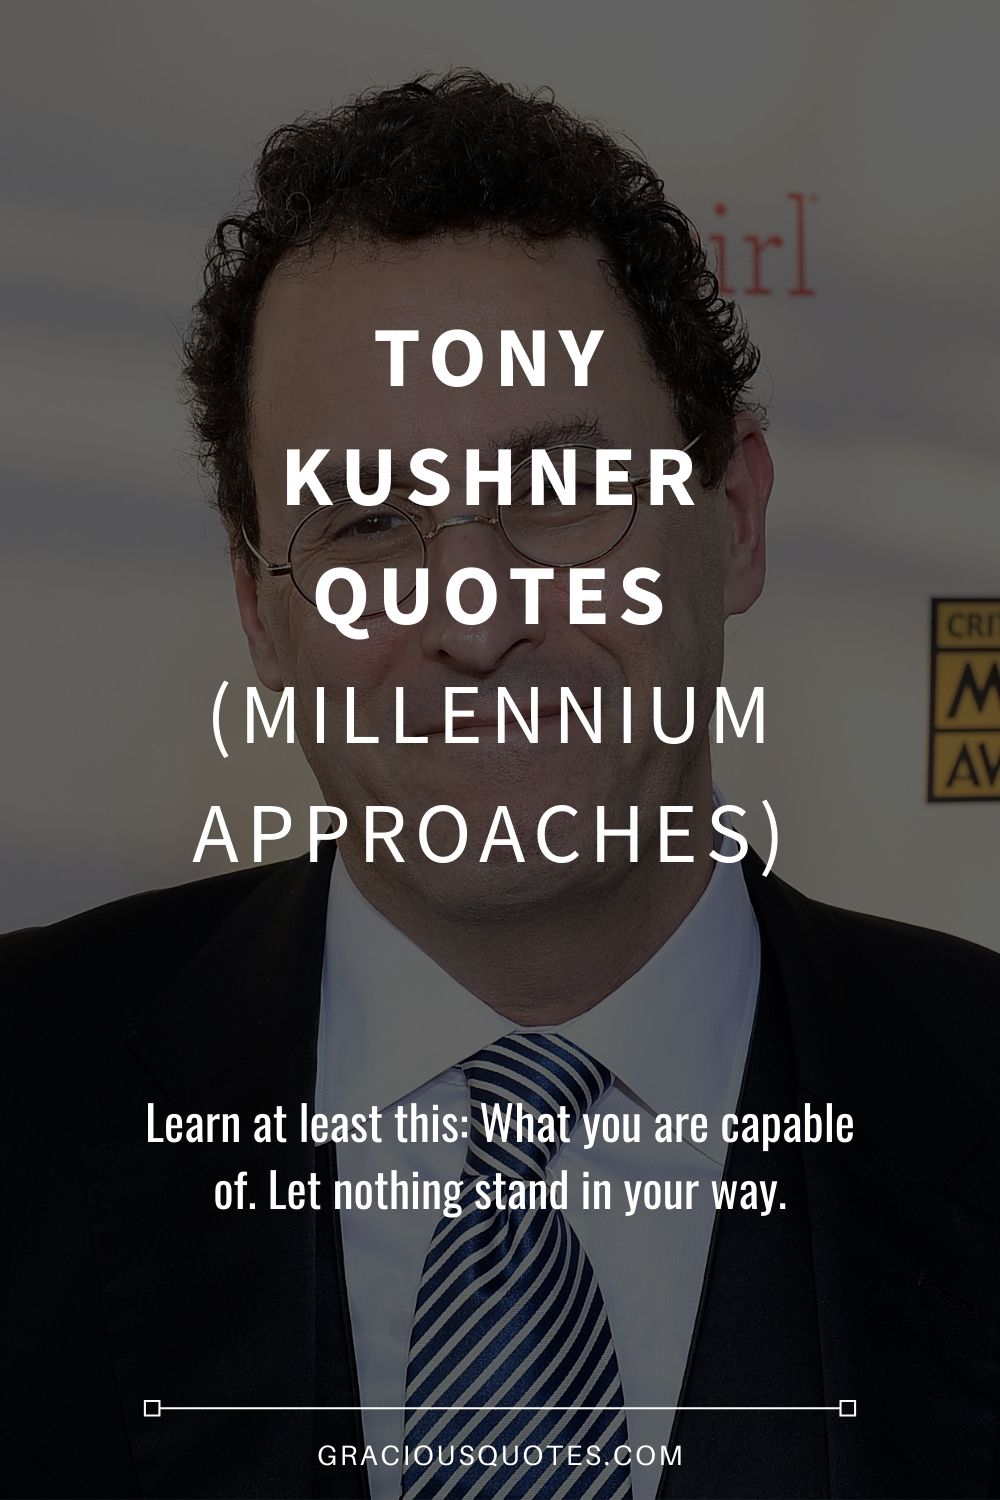 Tony Kushner Quotes (MILLENNIUM APPROACHES) - Gracious Quotes